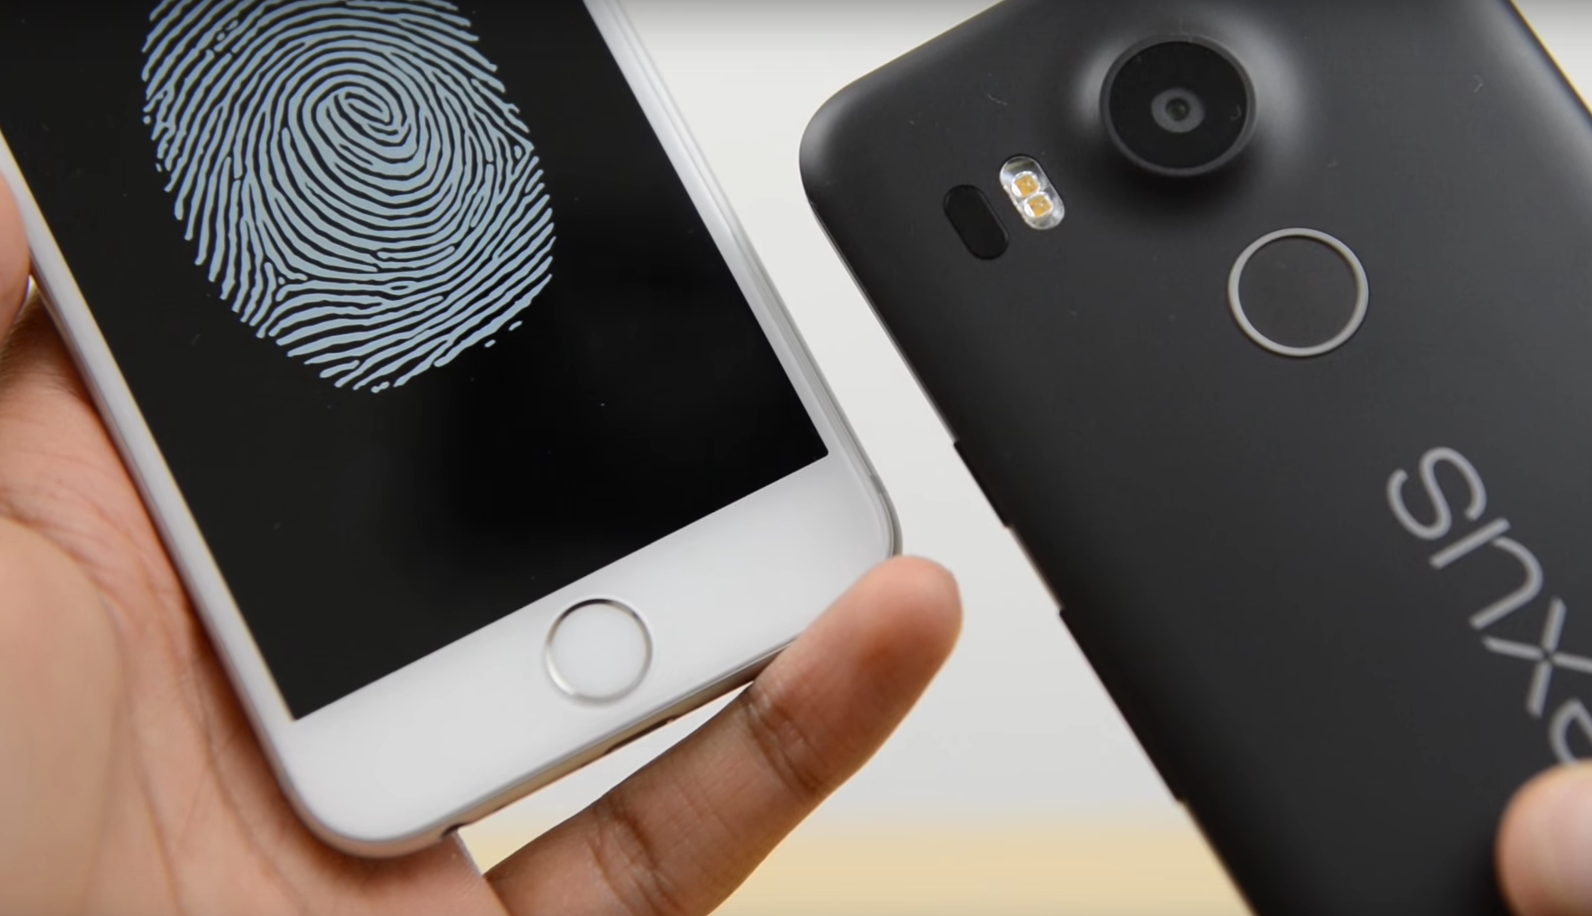 nexus-5x-fingerprint-scanner-even-faster-than-the-iphones-image-cultofandroidcomwp-contentuploads201510Screen-Shot-2015-10-19-at-172133-png